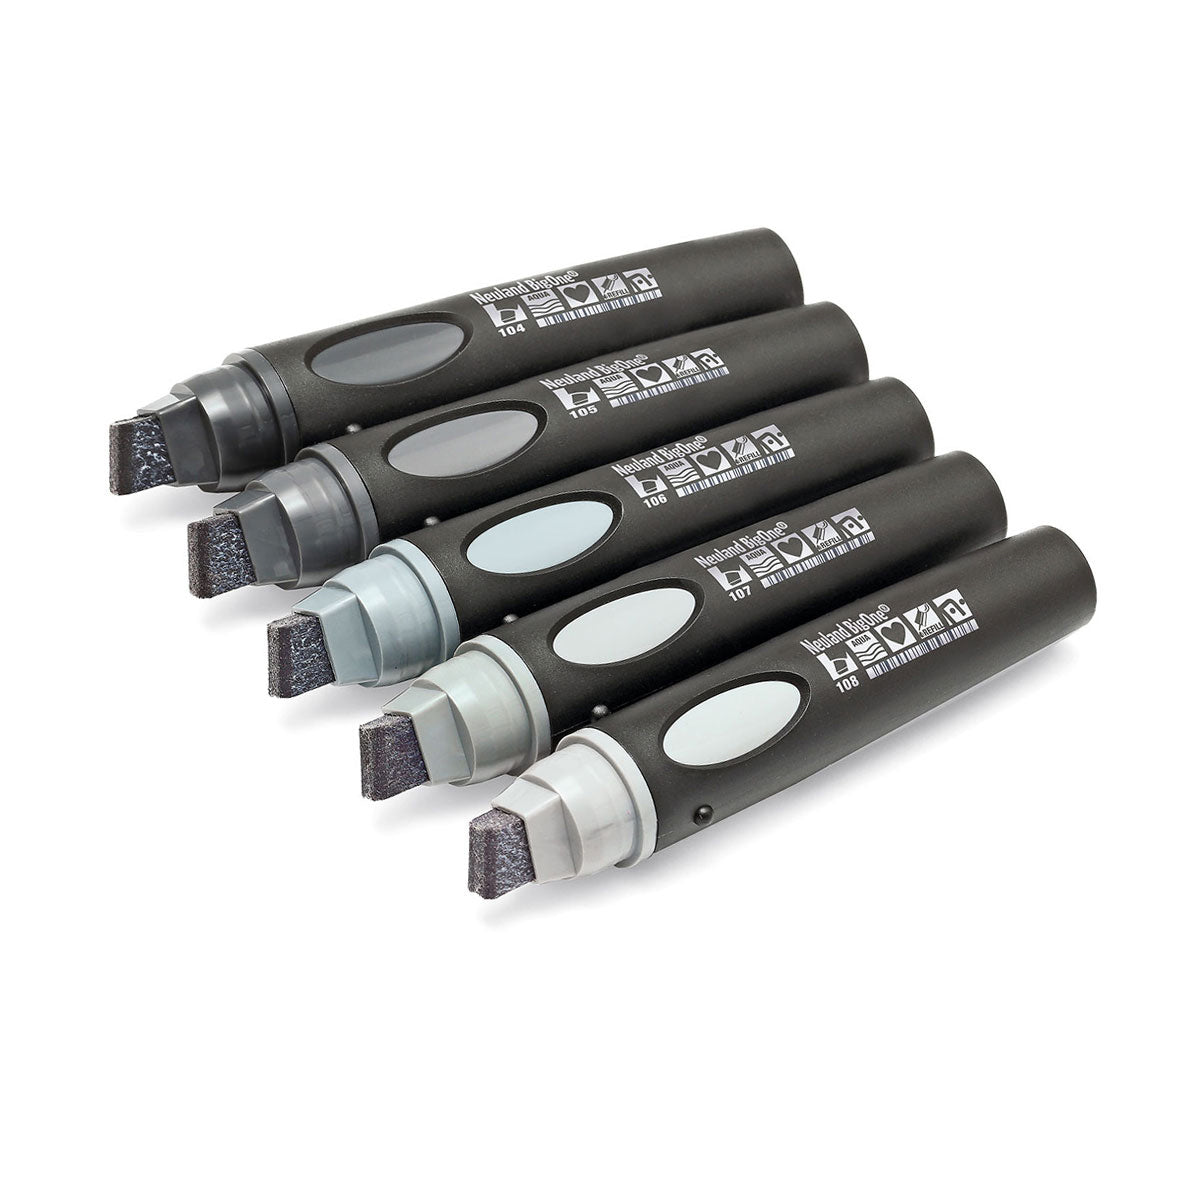 Neuland BigOne®, wigpunt 6-12 mm: 5/ kleur sets- set no. 7 tones of grey